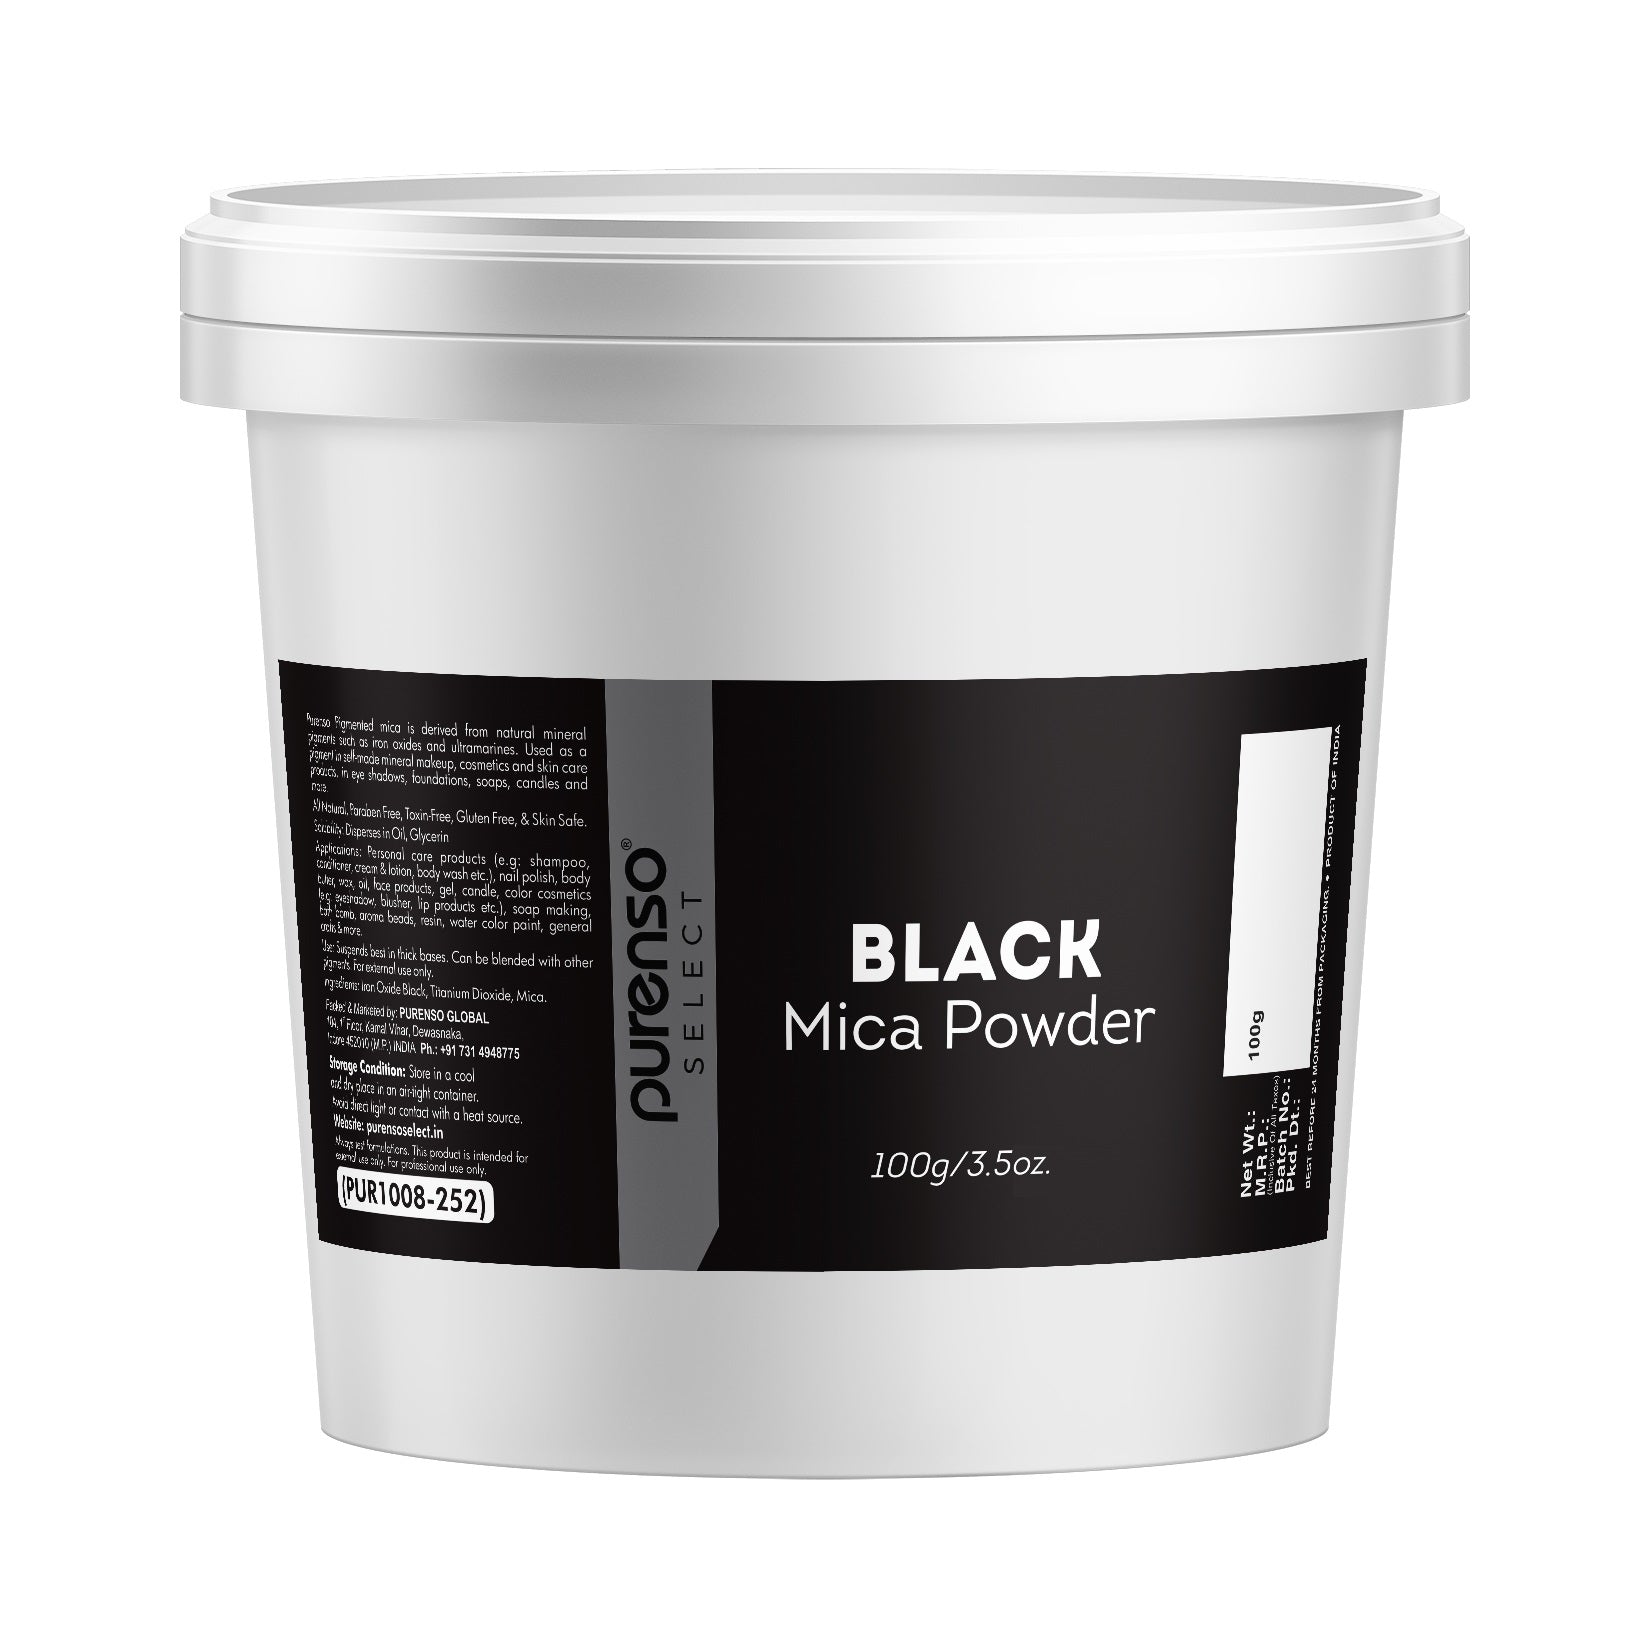 Black Mica Powder